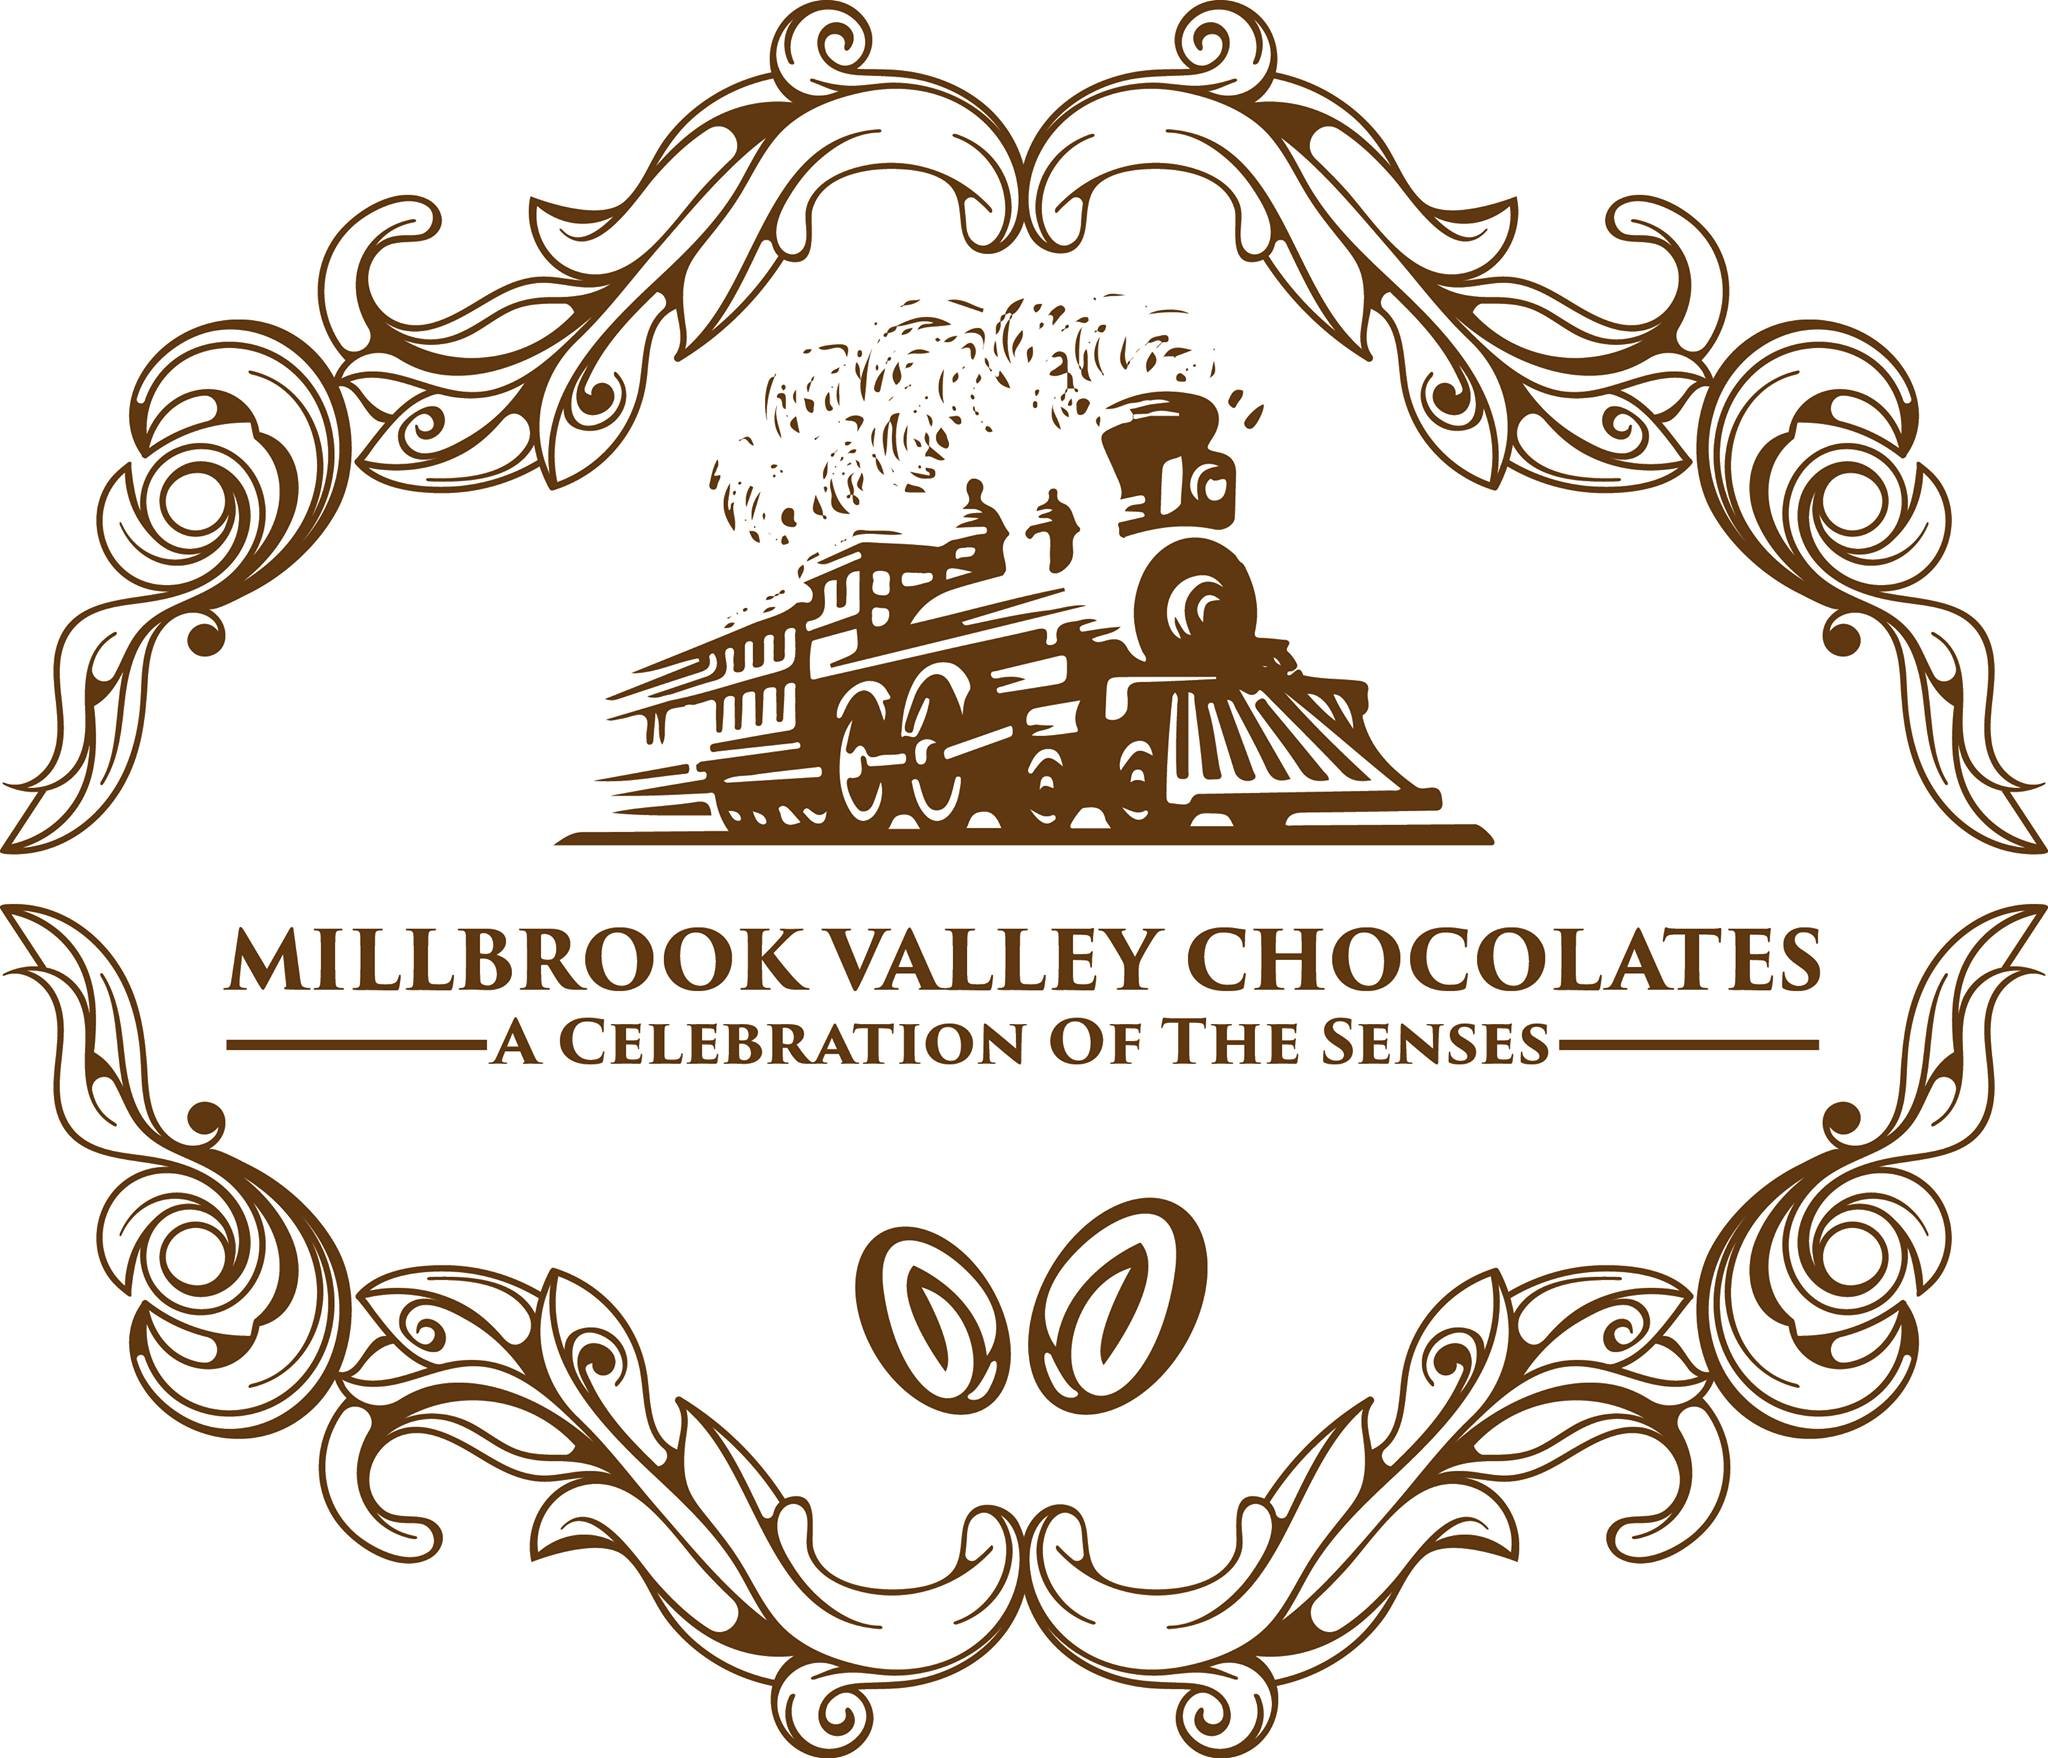 Millbrook Valley Chocolates